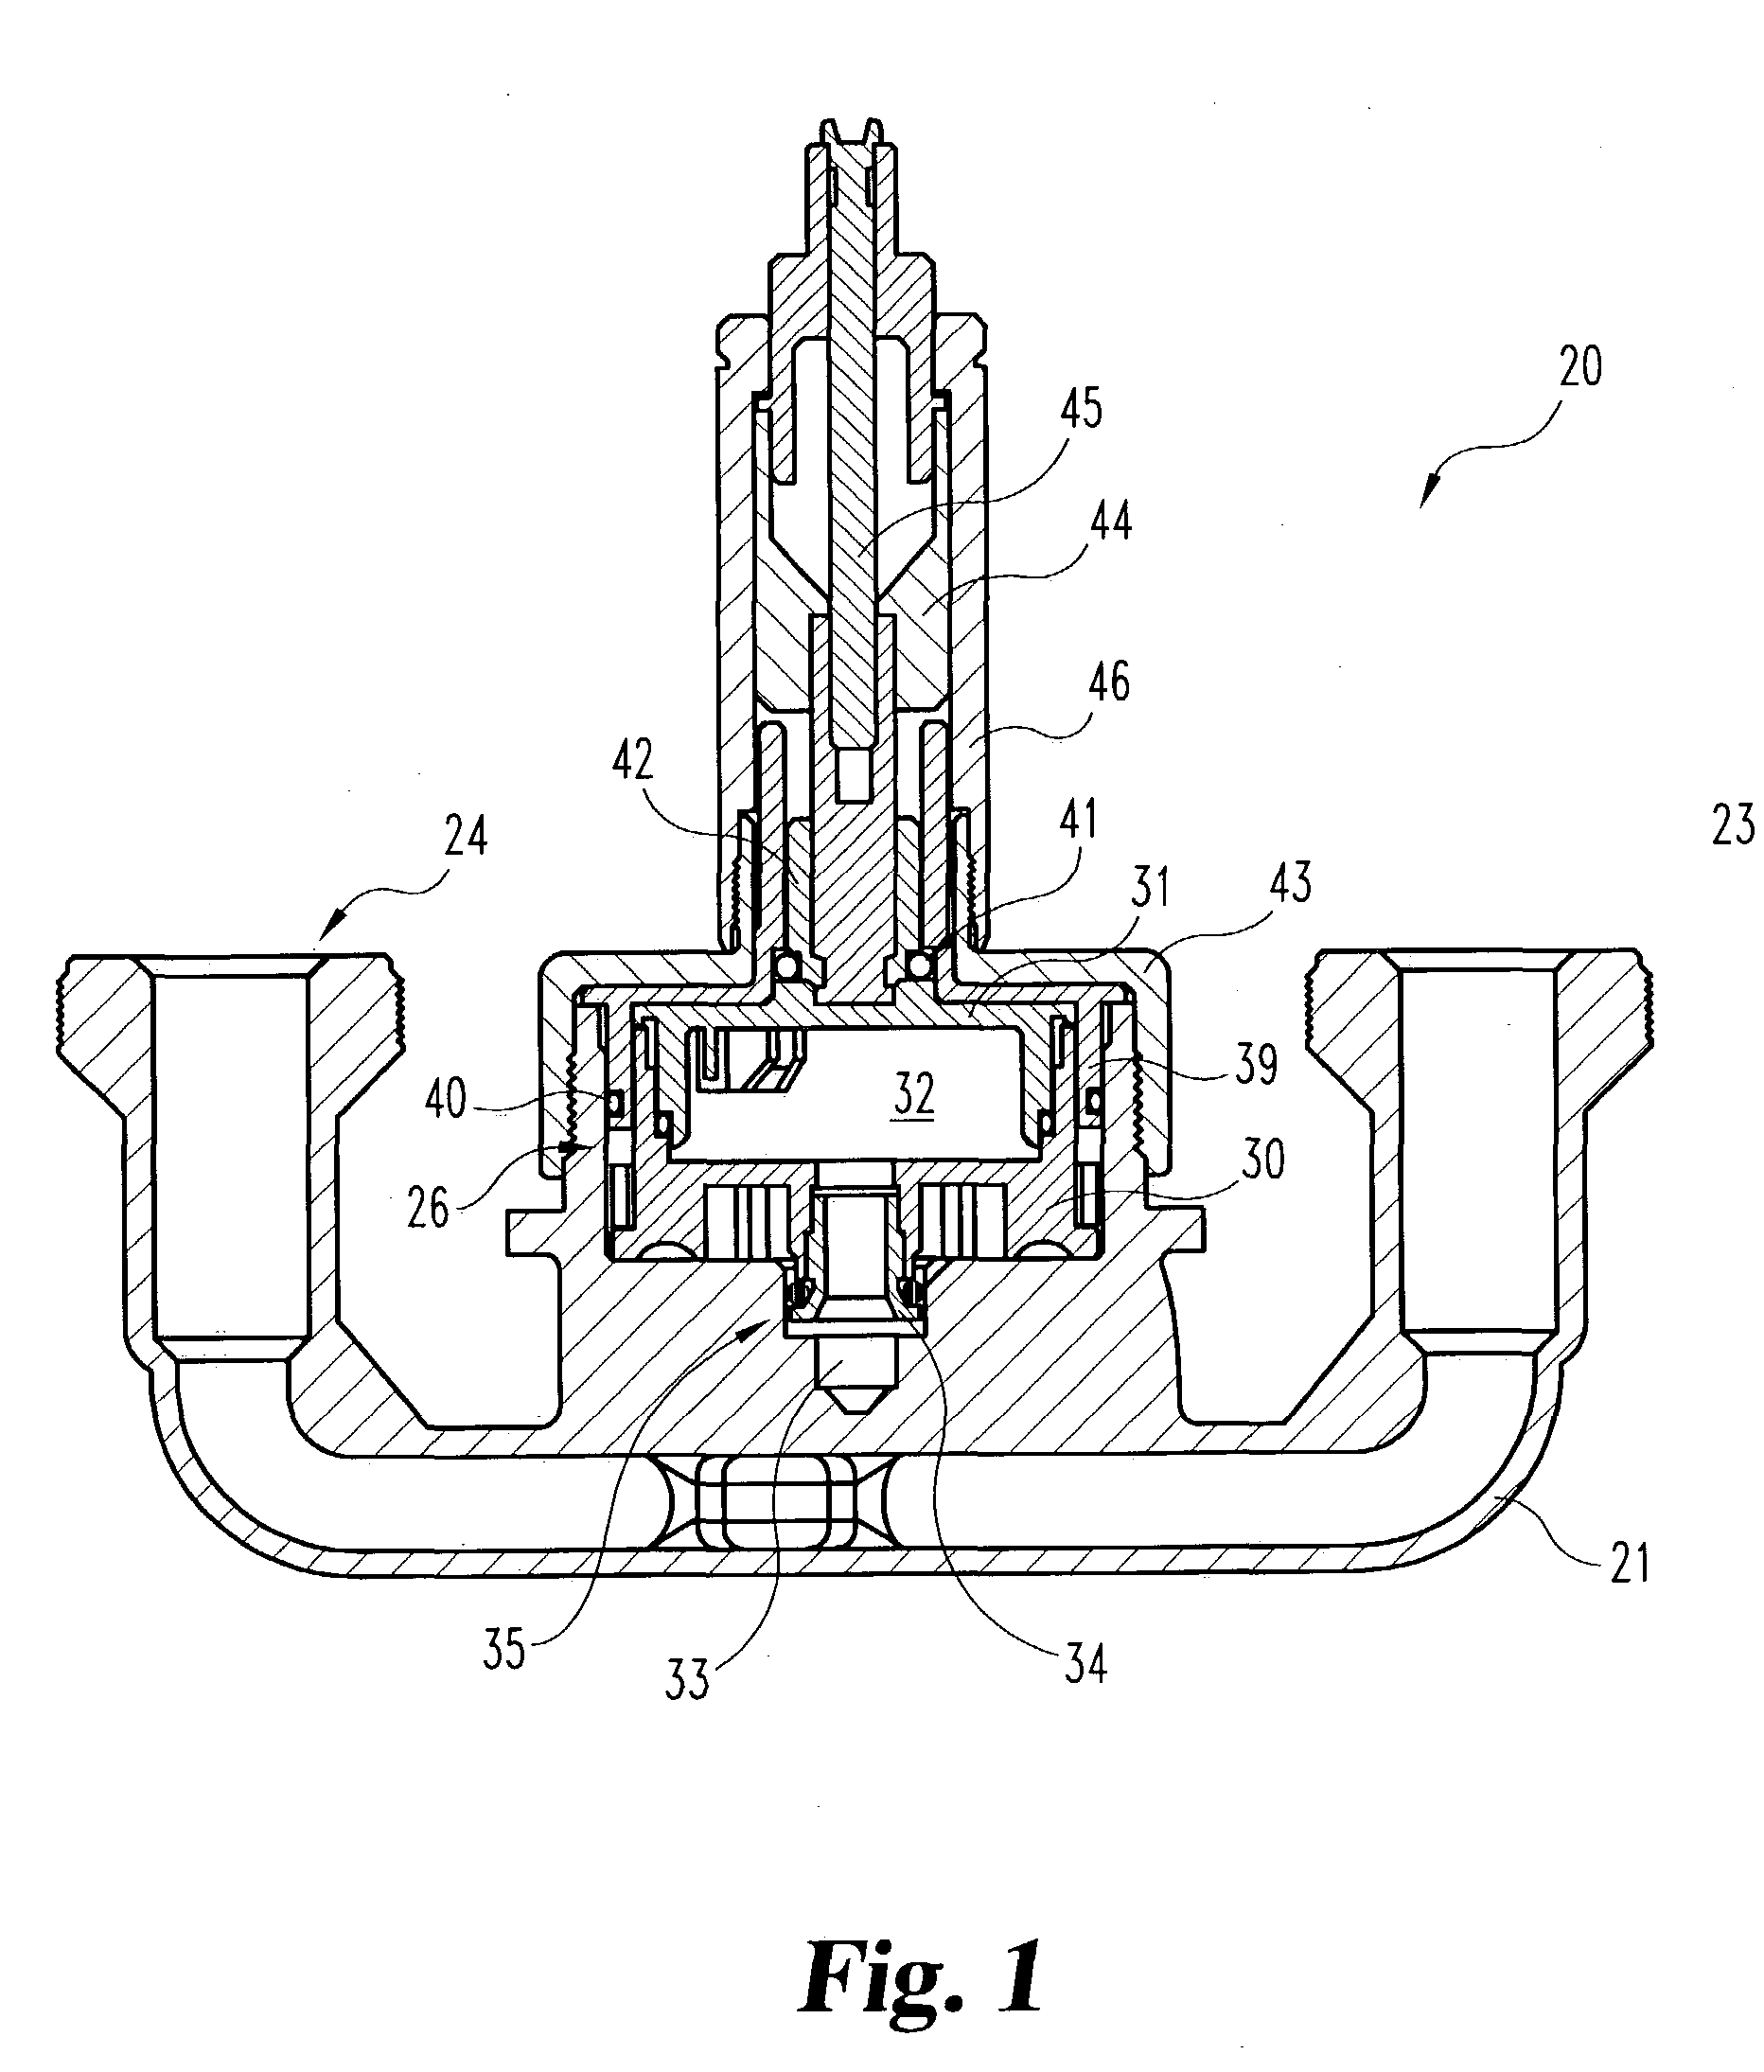 Multi-port diverter valve assembly with integral detent